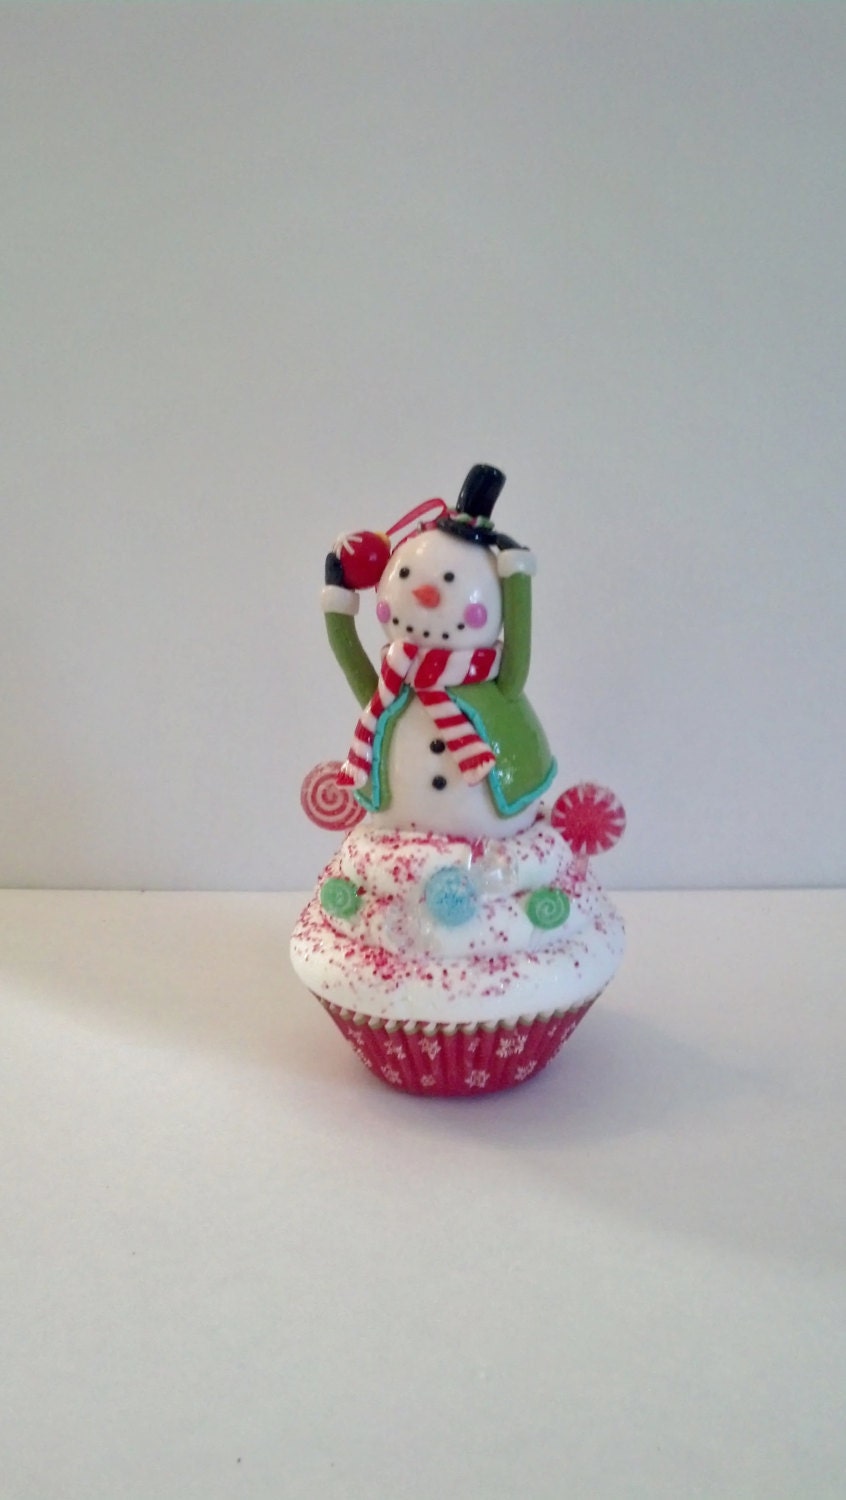 Festive Snowman Fake Cupcake Photo Prop, Christmas Tree Ornament, Shop Displays, Secret Santa Gifts, Christmas Party Decorations Displays